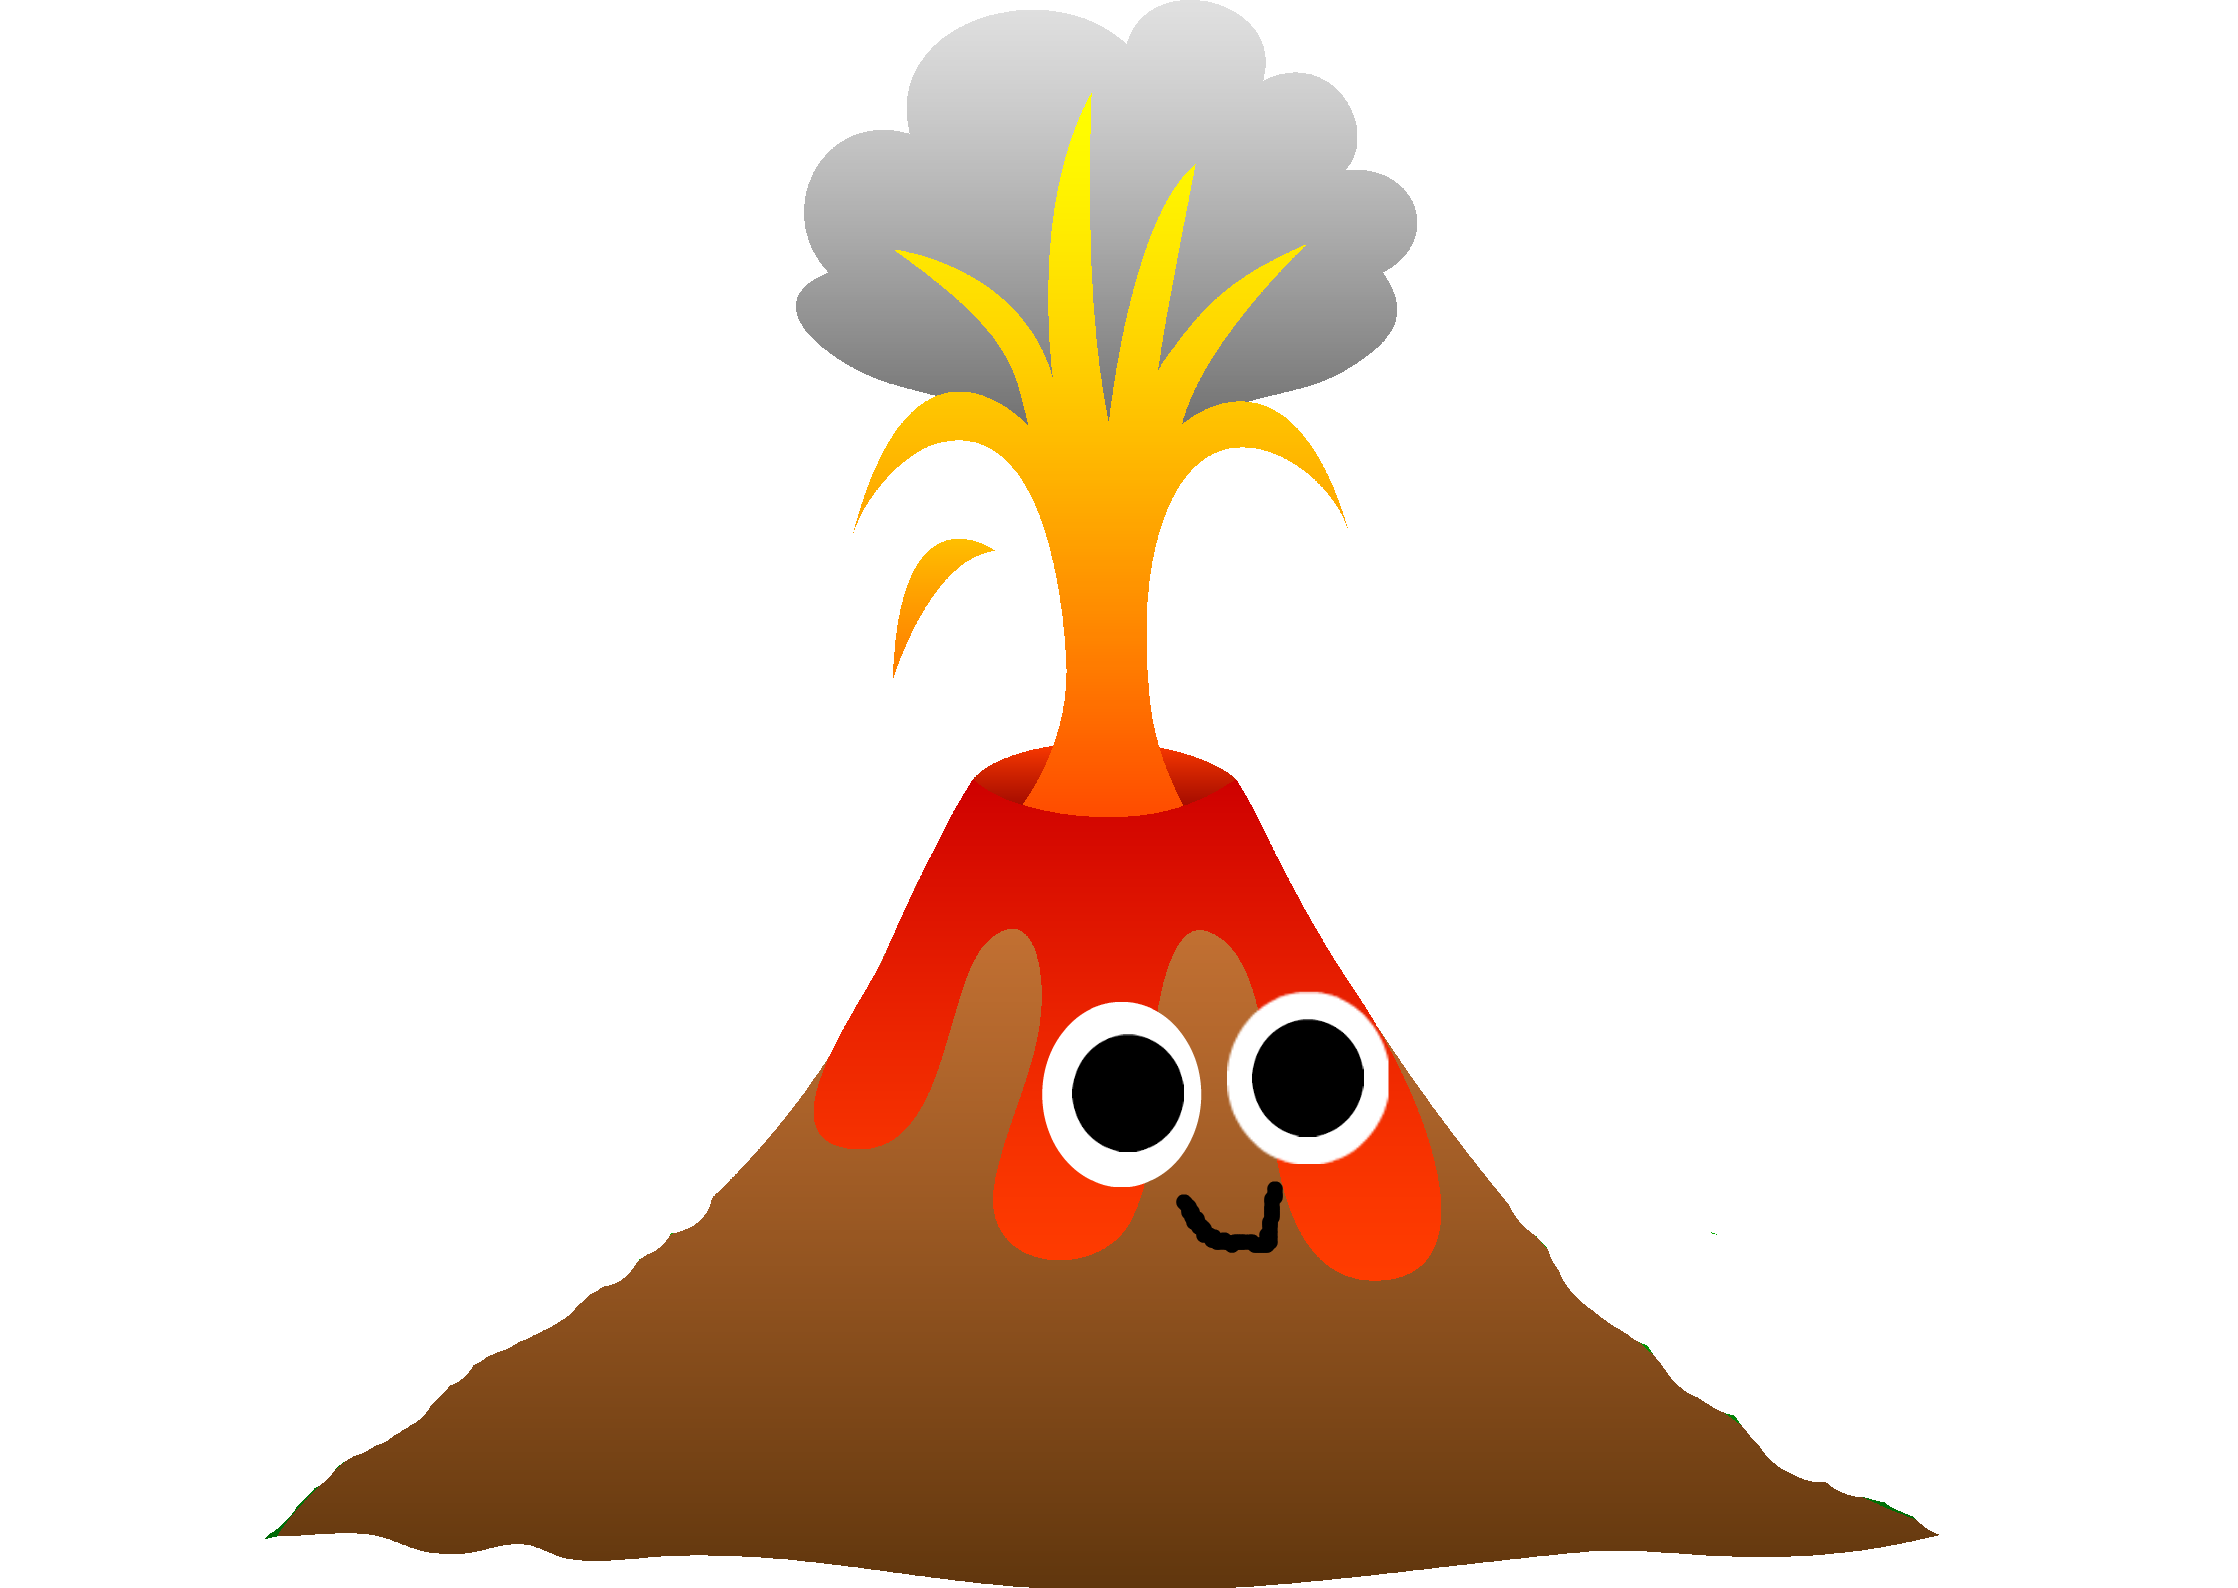 Vulkan